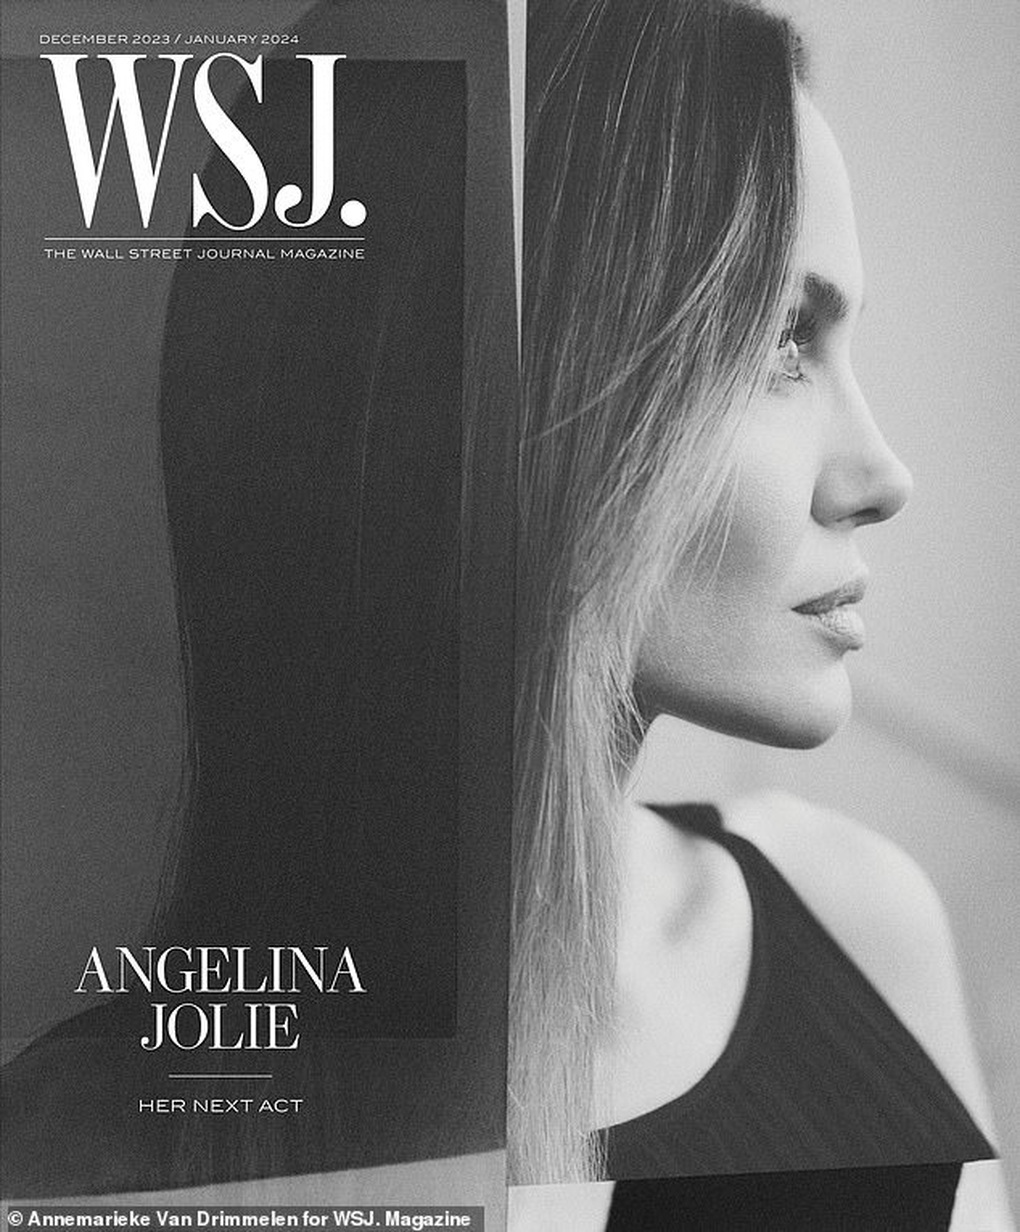 Angelina Jolie nói giới sao Hollywood thiển cận, muốn rời xa showbiz - 1